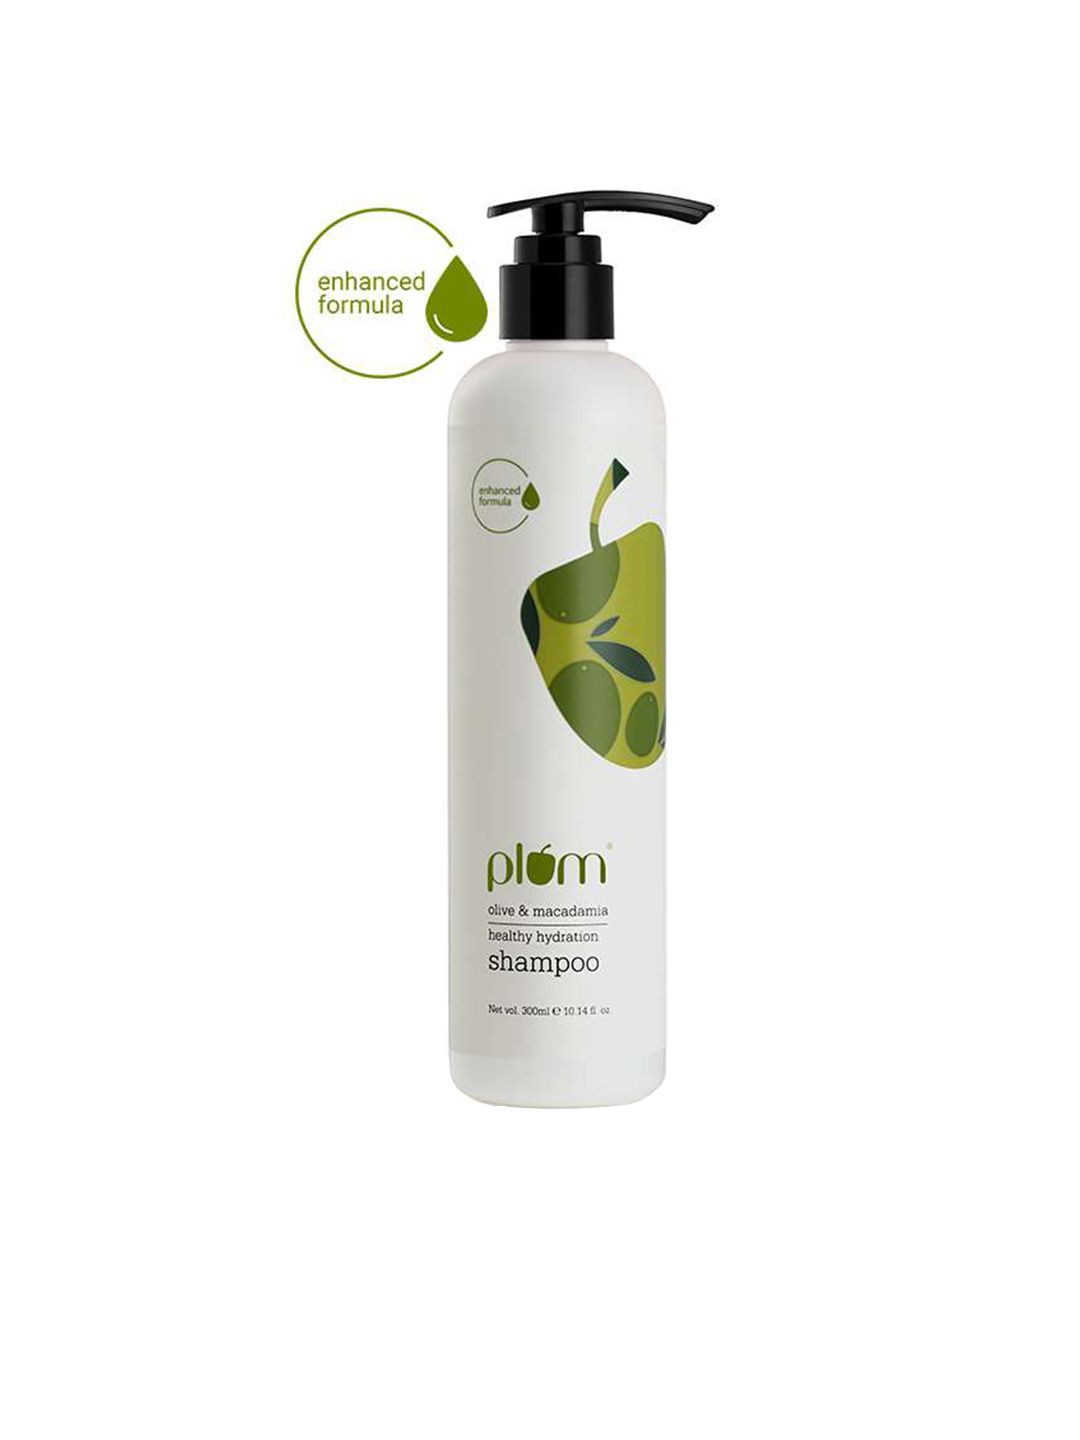 Plum Olive & Macadamia Healthy Hydration Shampoo 300ml Price in India